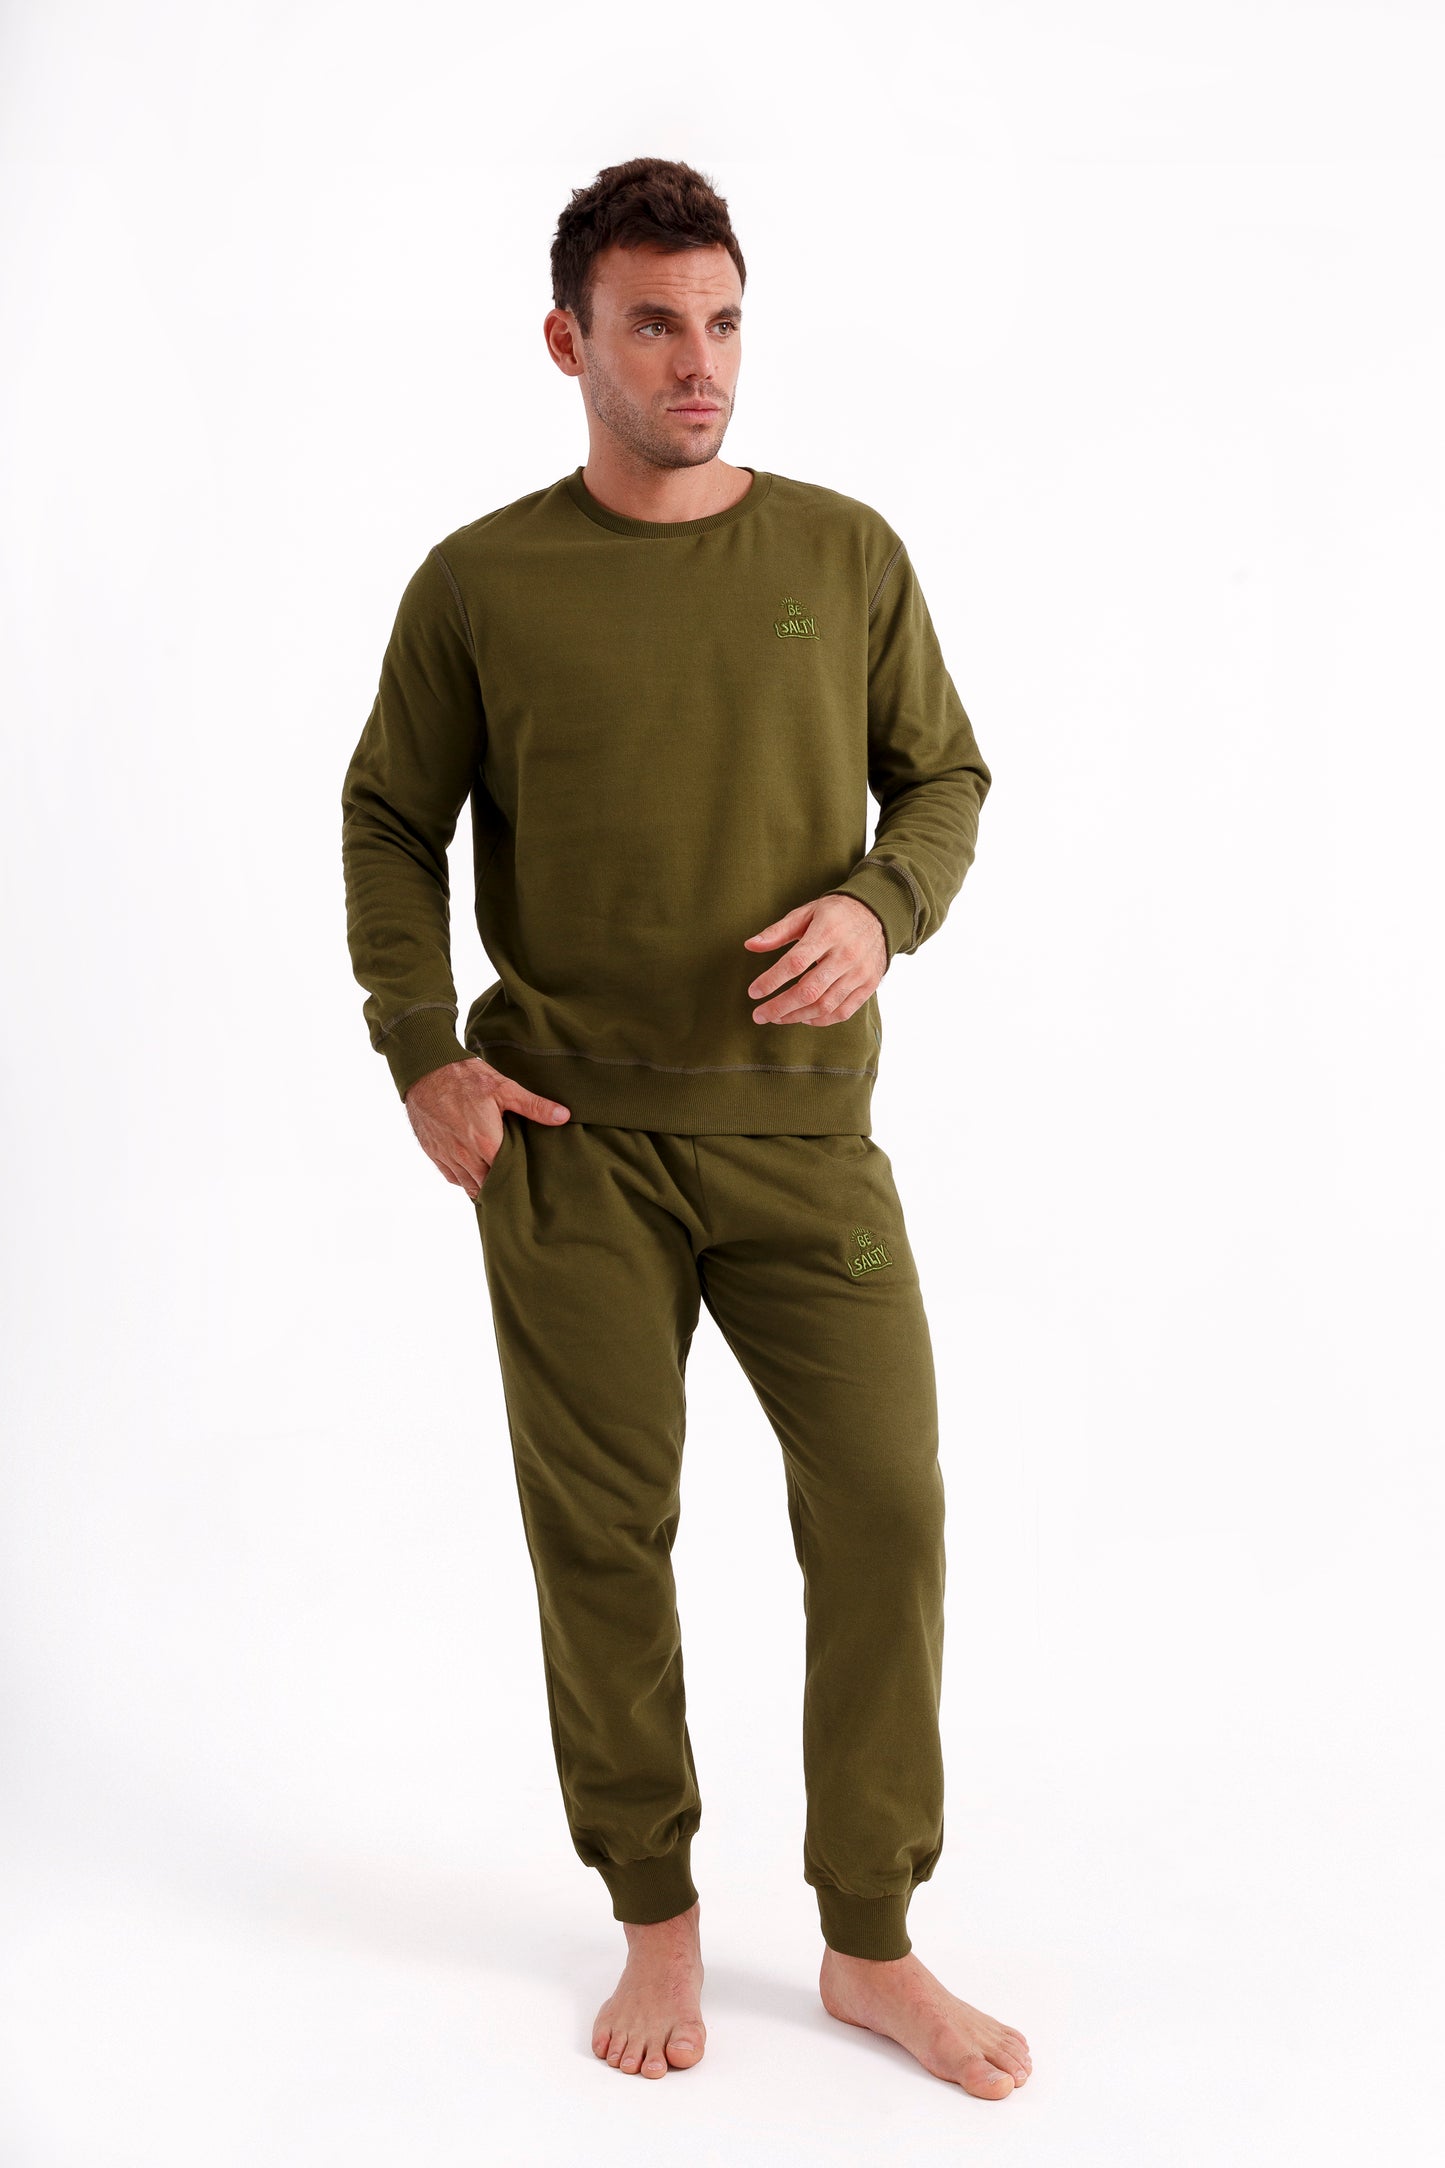 Unisex Sweatshirt - Army Green